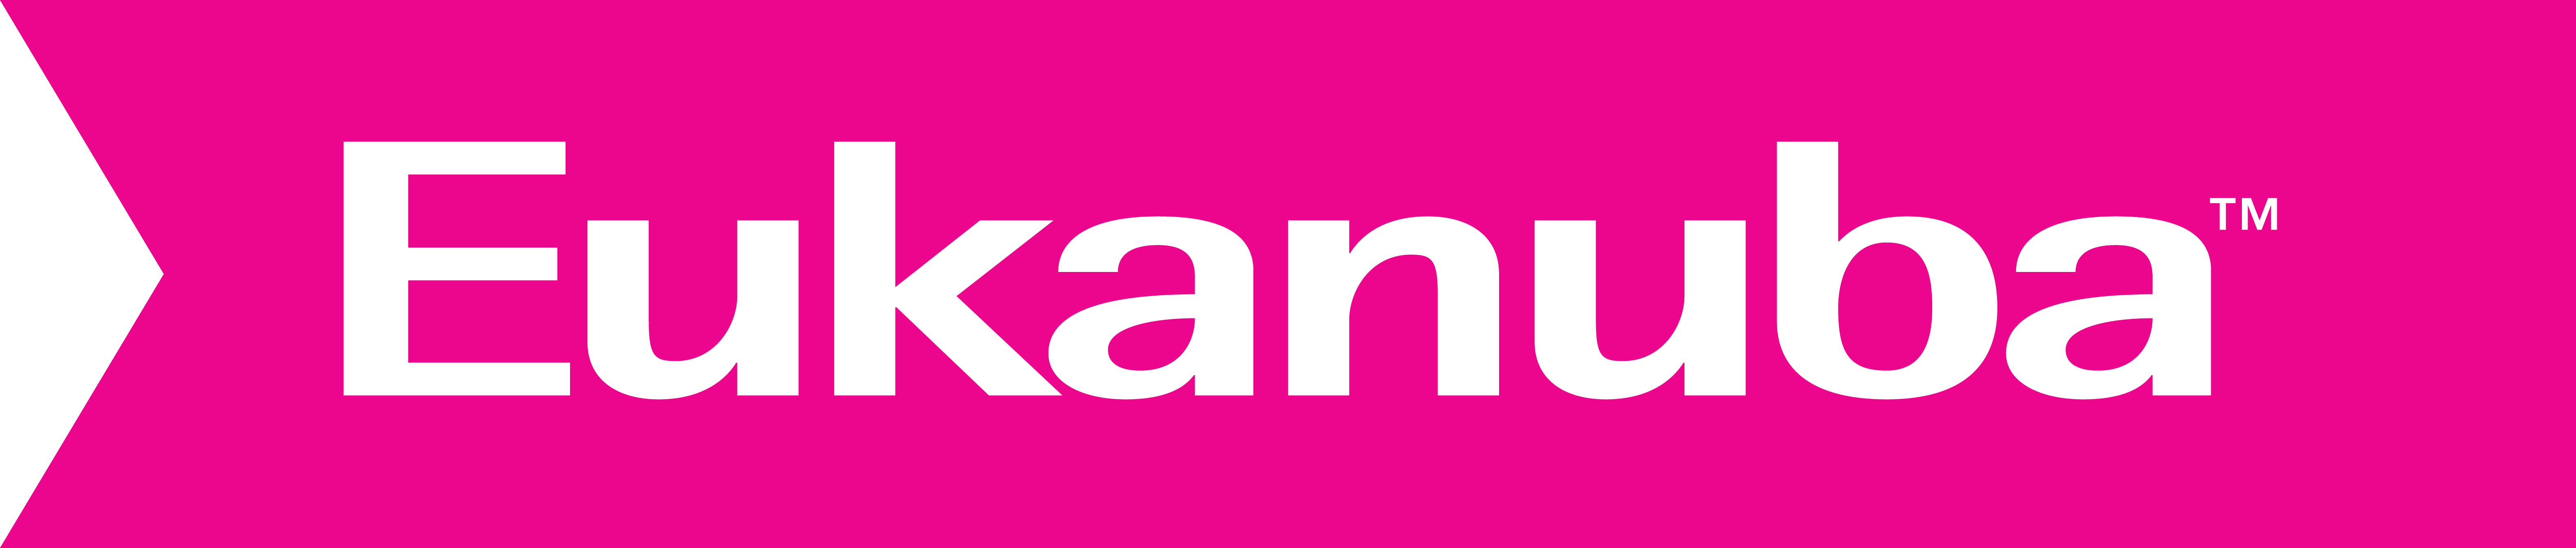 Eukanuba_logo